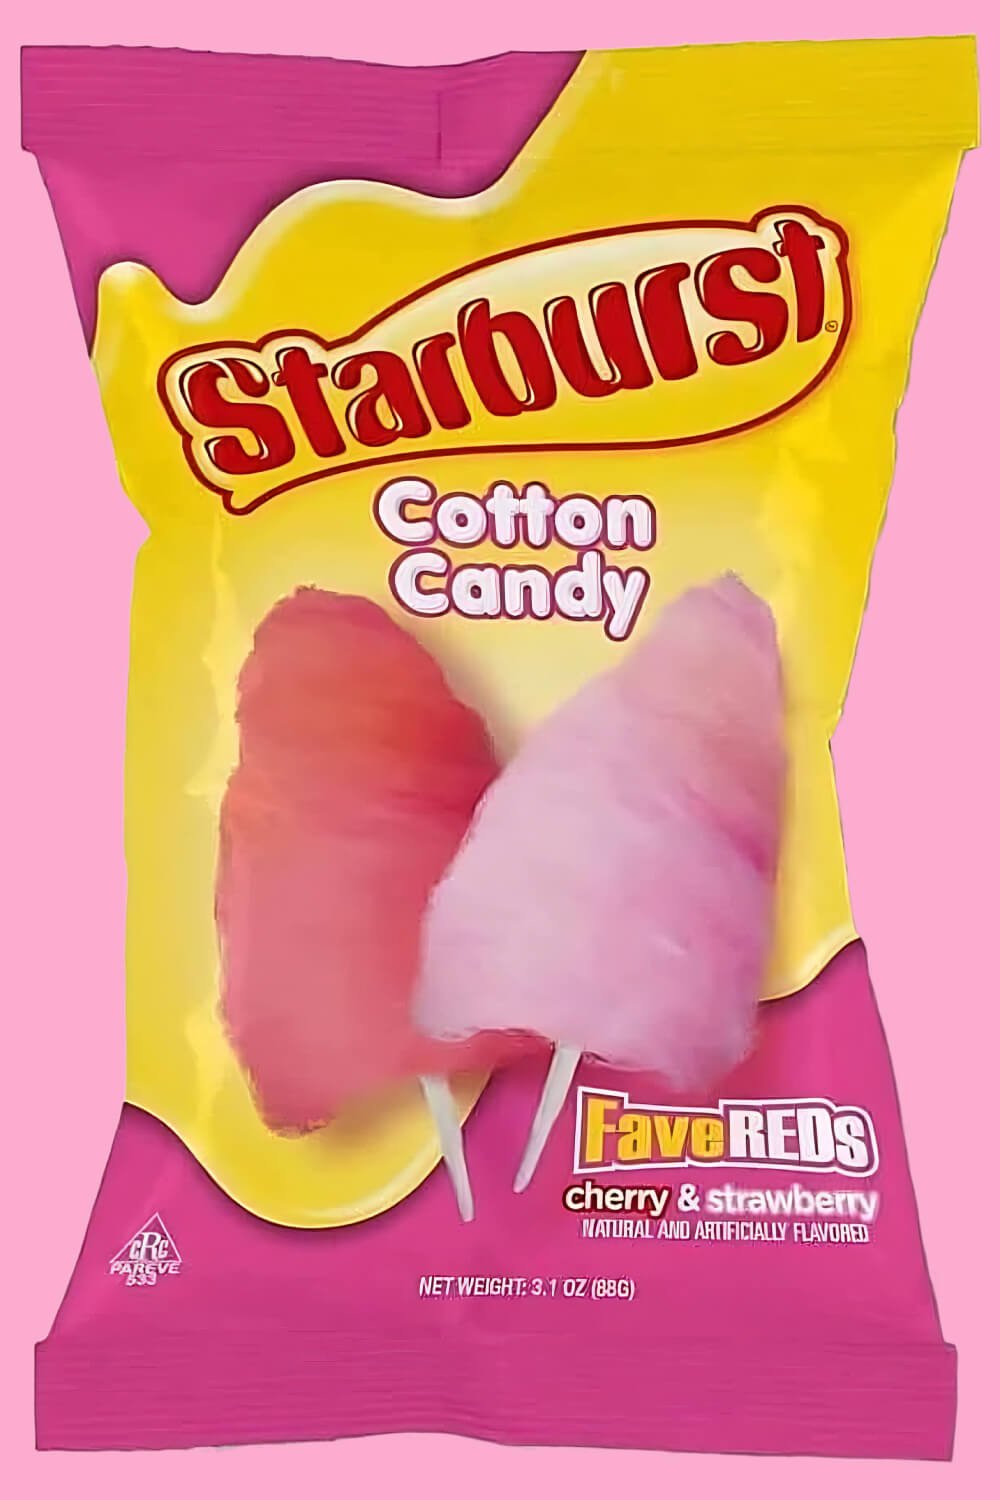 Bag of Starburst Cotton Candy